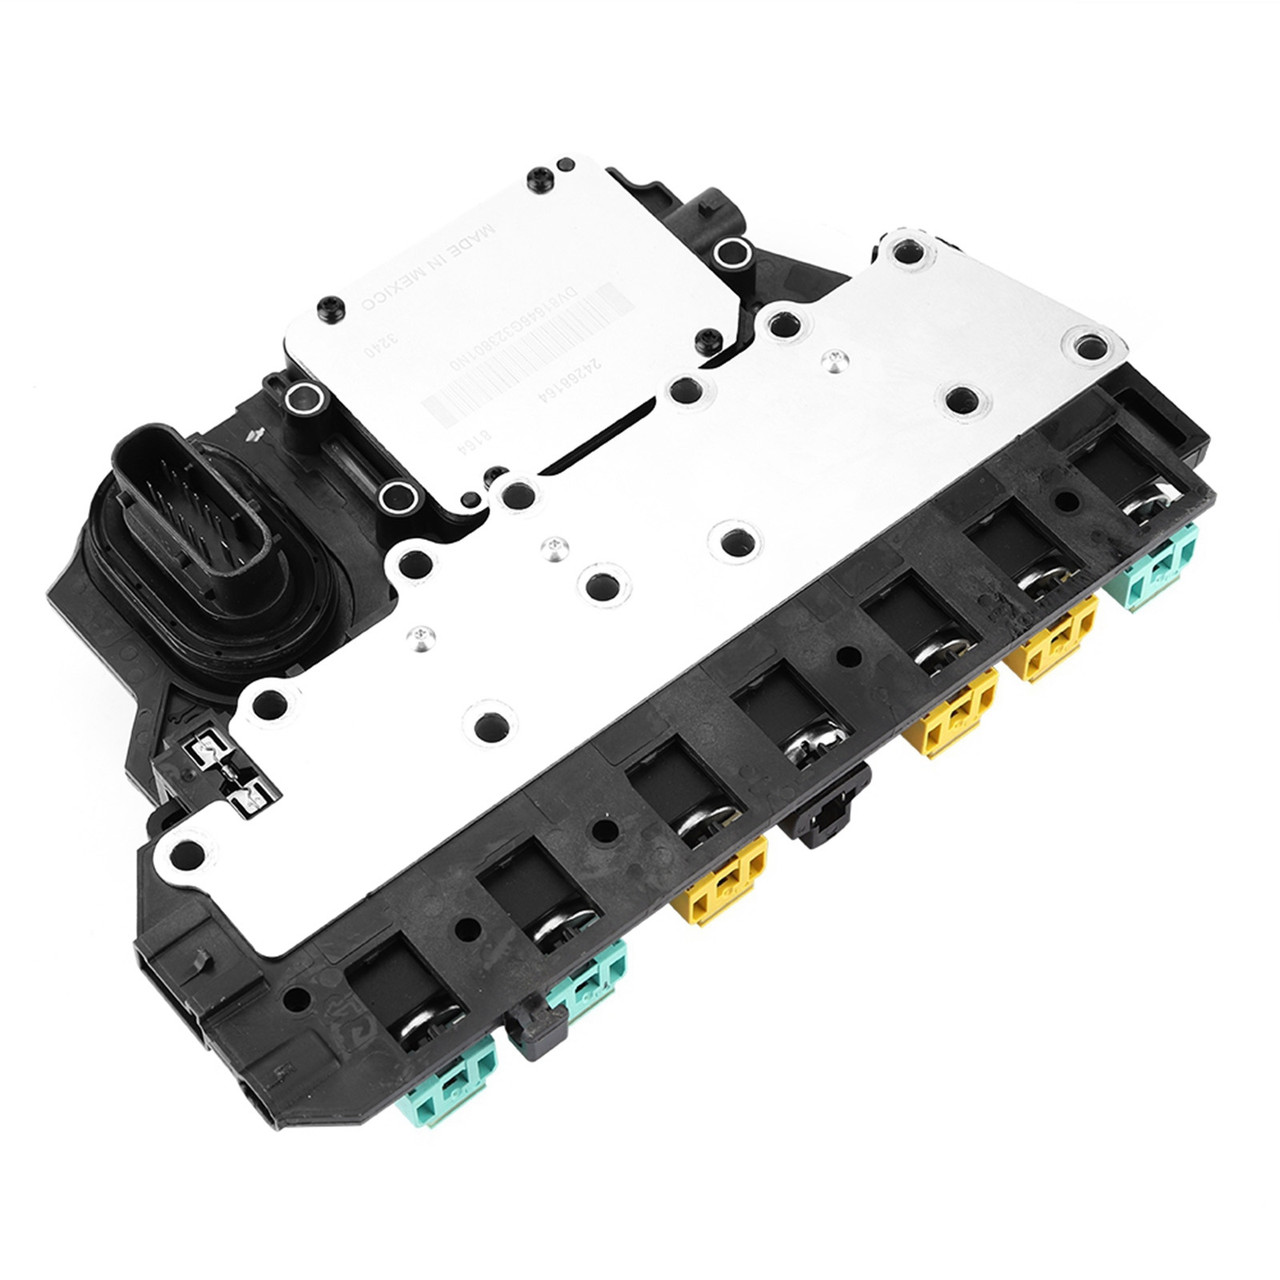 2014-2018 CHEVROLET SONIC 6T40 6T45 Transmission Control Module (TCM)